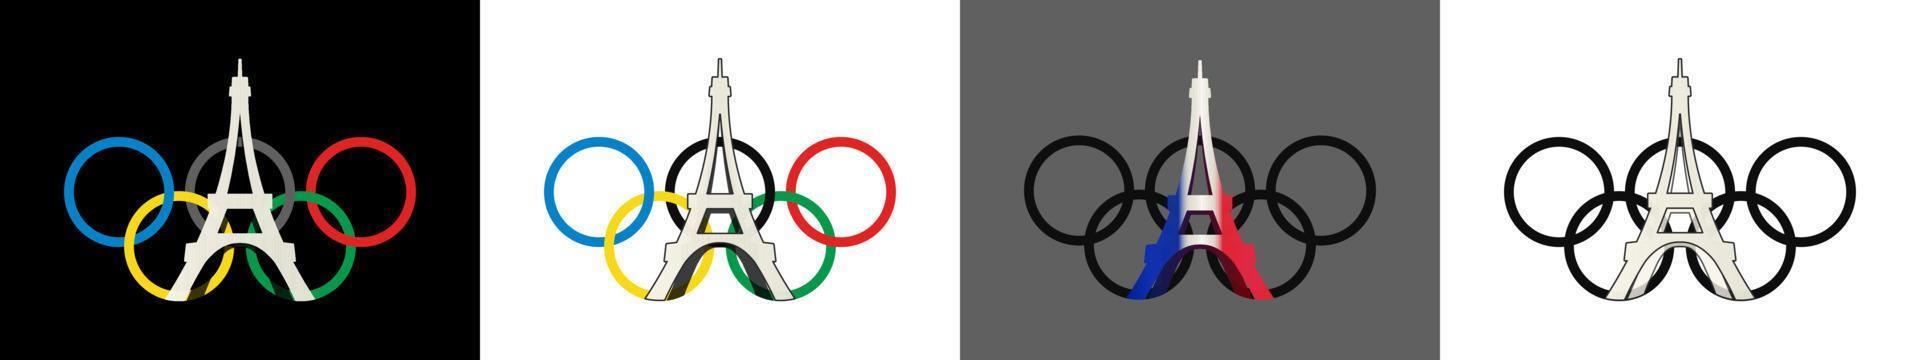 olímpico logo París 2024 vistoso vector ilustración